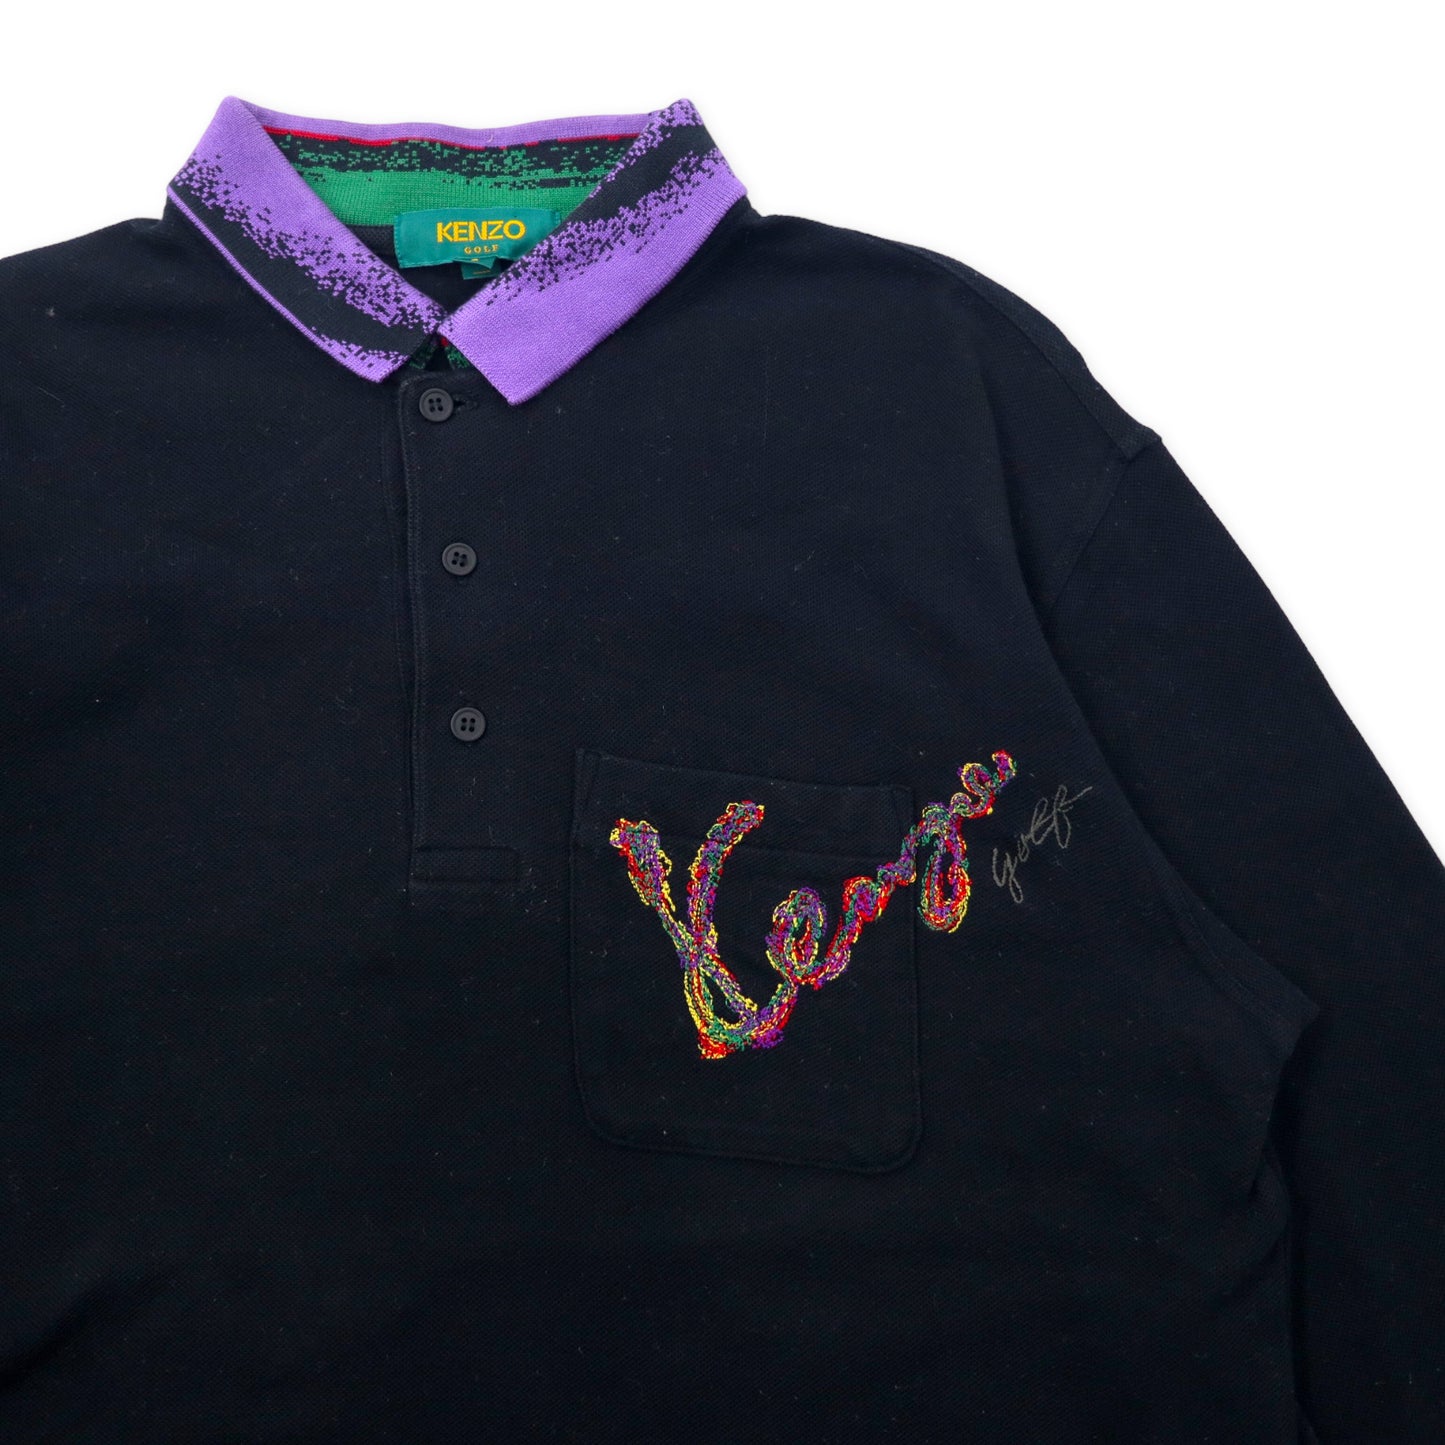 KENZO GOLF Long Sleeve Polo Shirt 3 Black Cotton Embroidery Japan